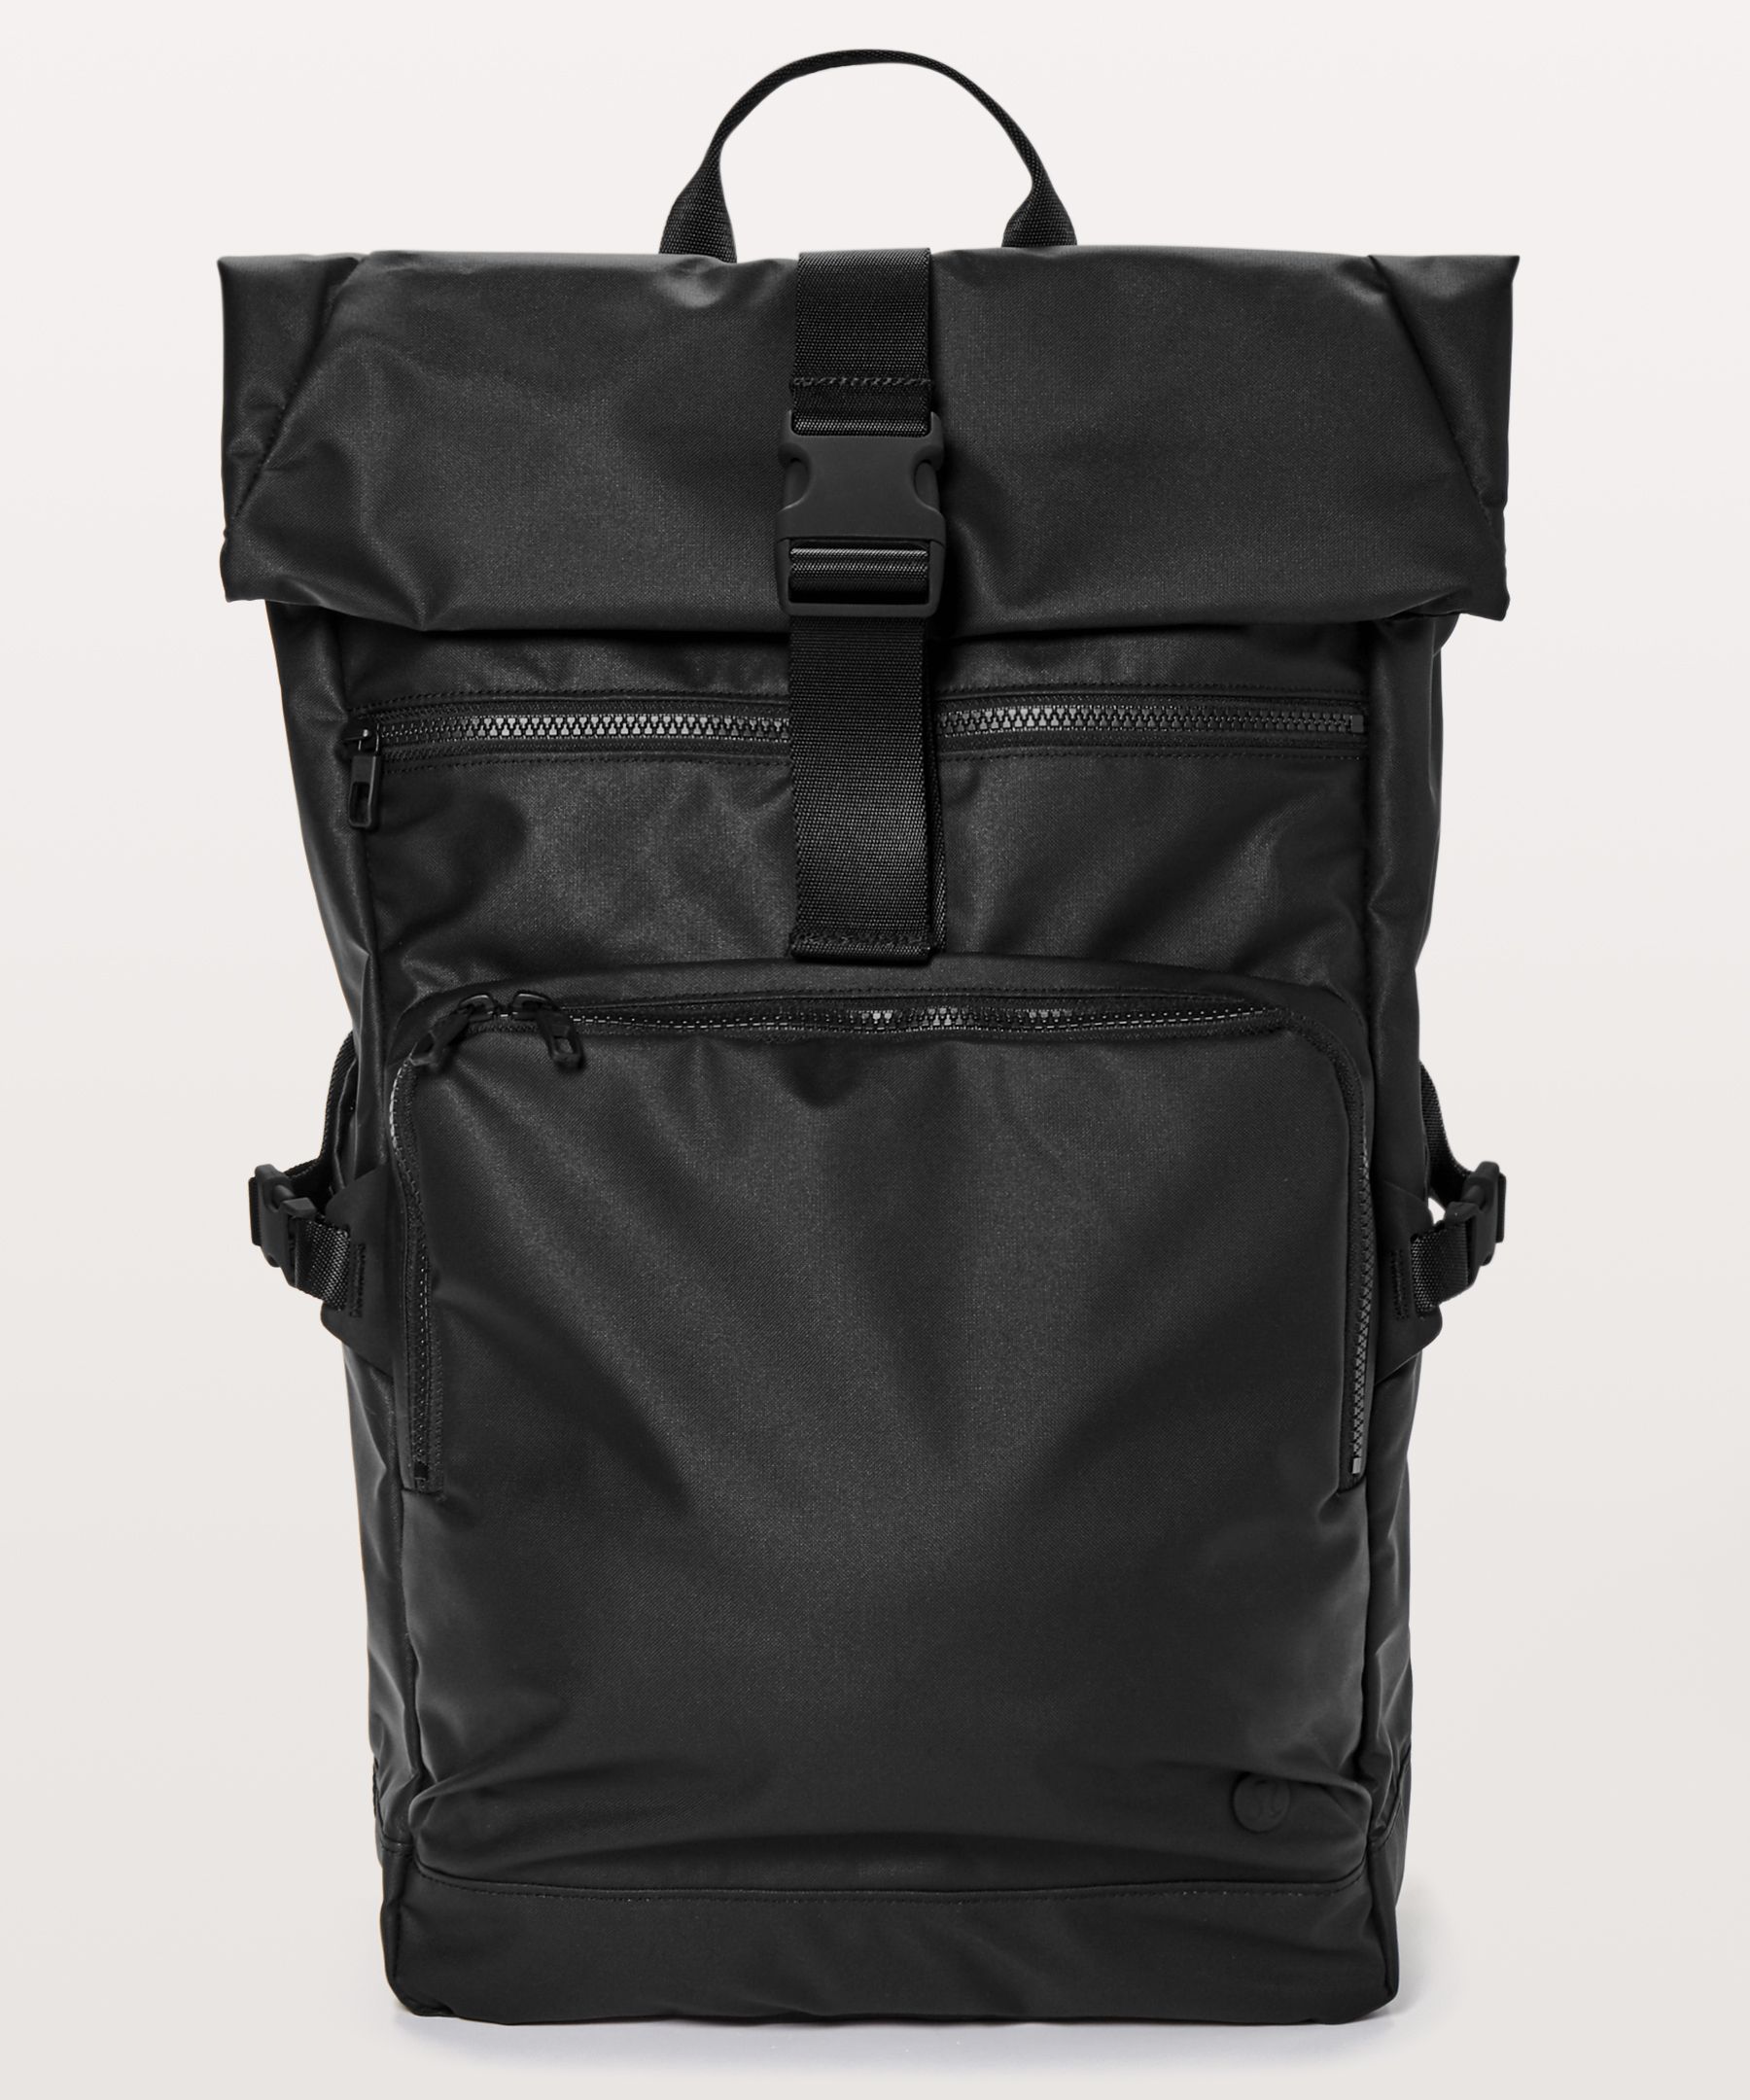 Lululemon Not Lost Backpack In Black